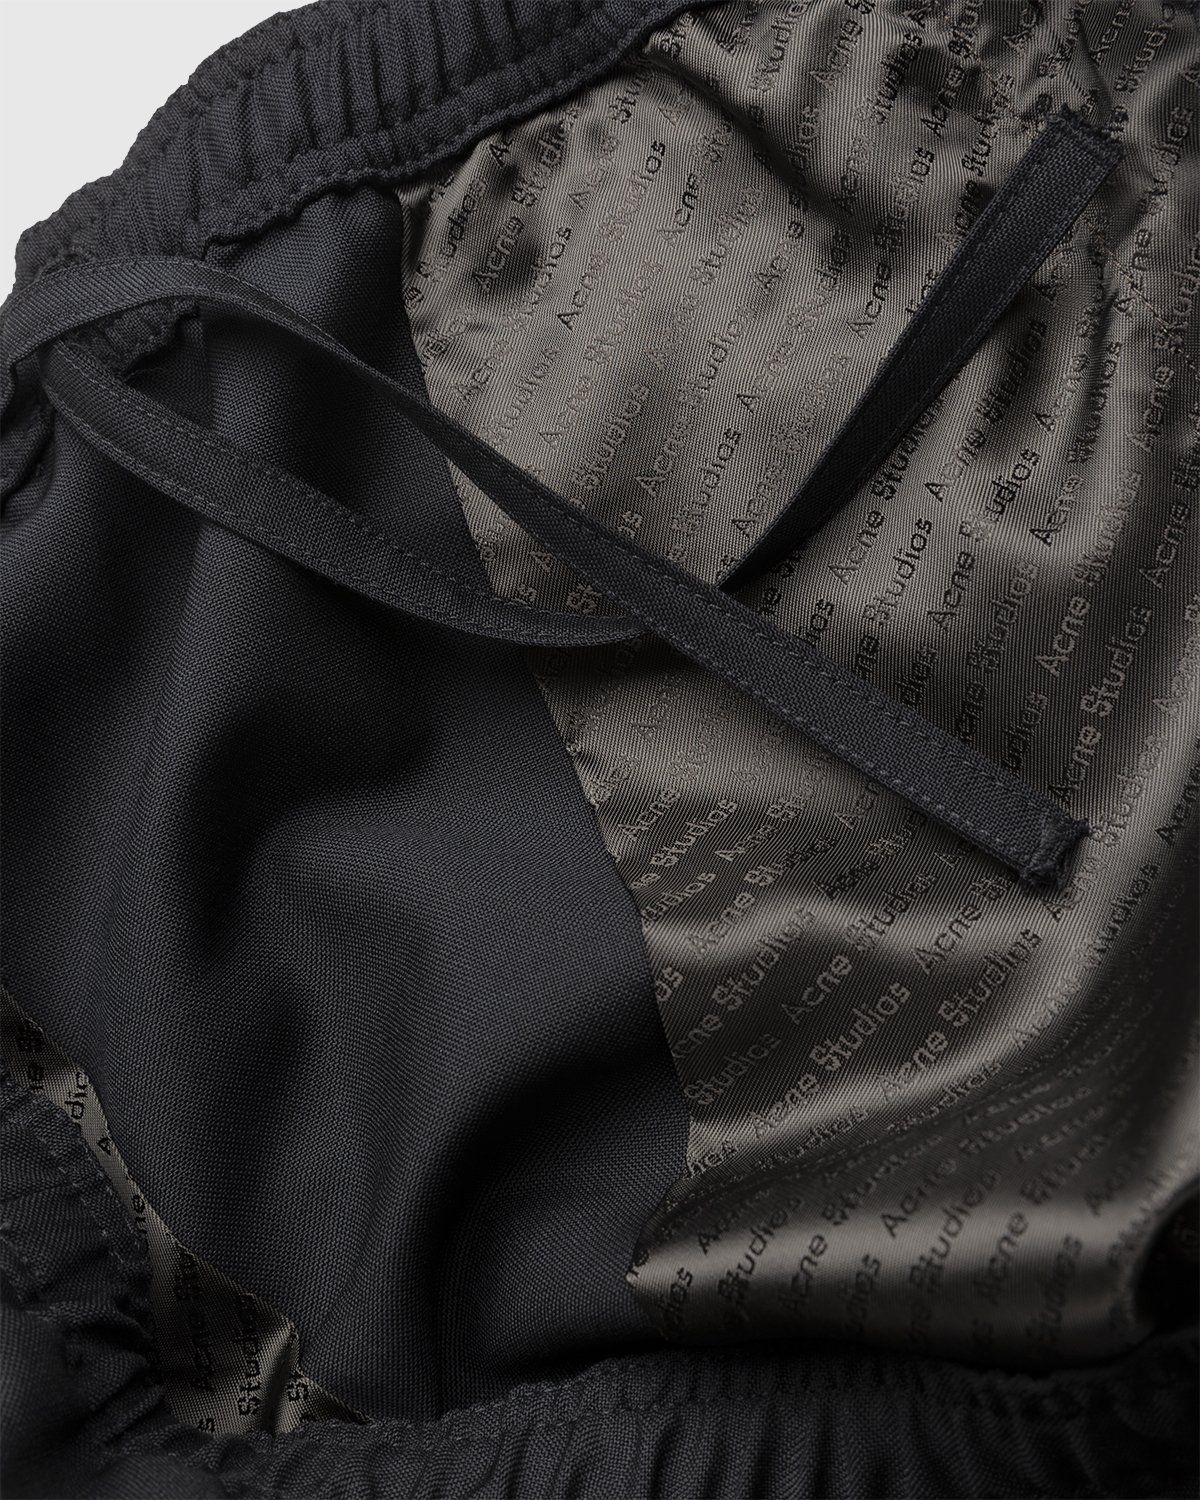 Acne Studios – Mohair Blend Drawstring Trousers Black - Trousers - Black - Image 5